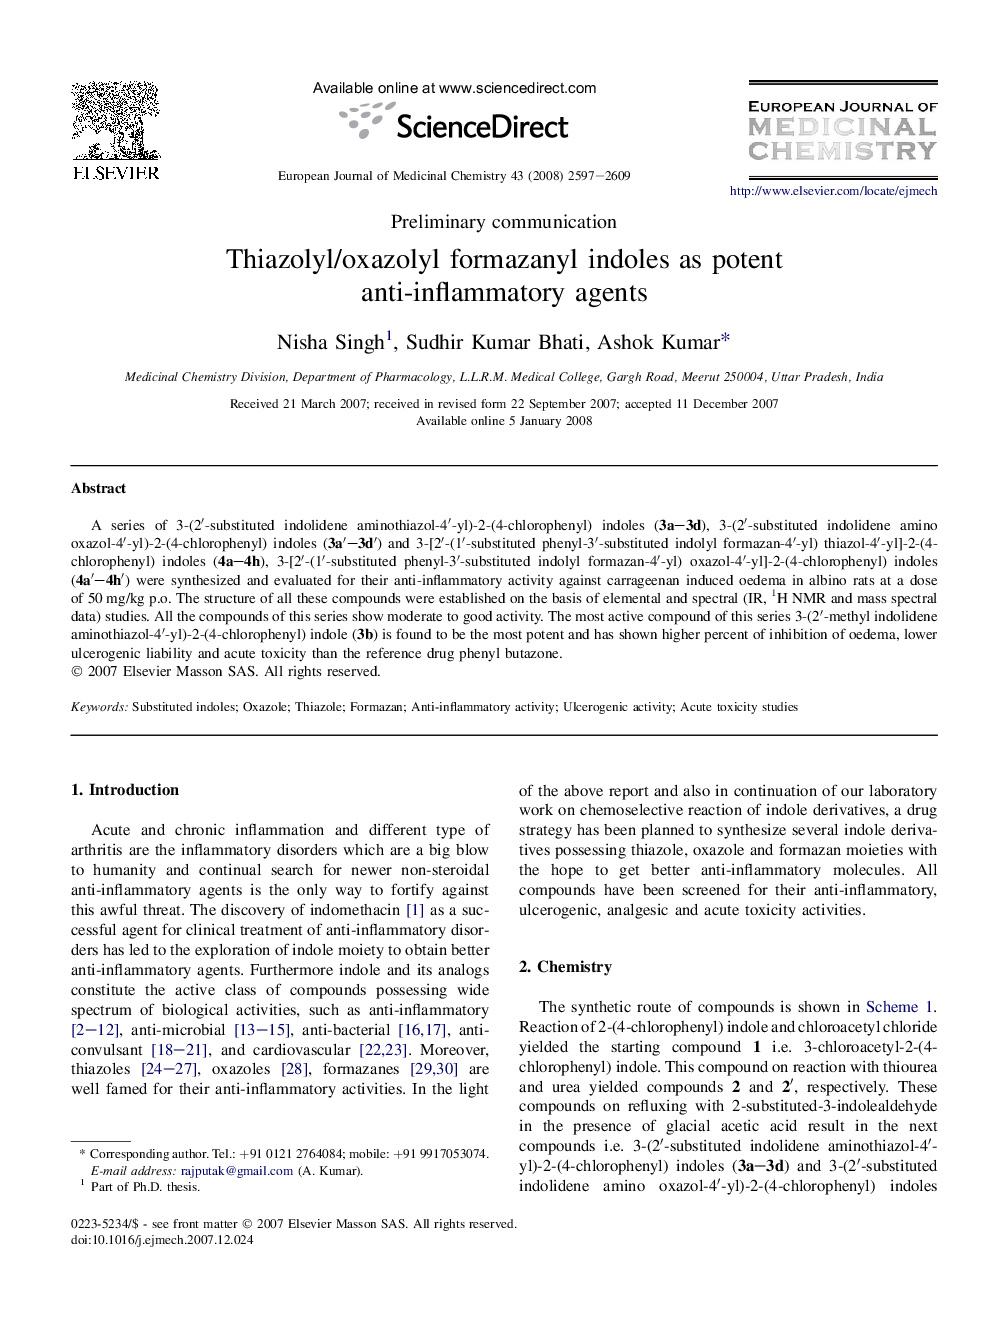 Thiazolyl/oxazolyl formazanyl indoles as potent anti-inflammatory agents